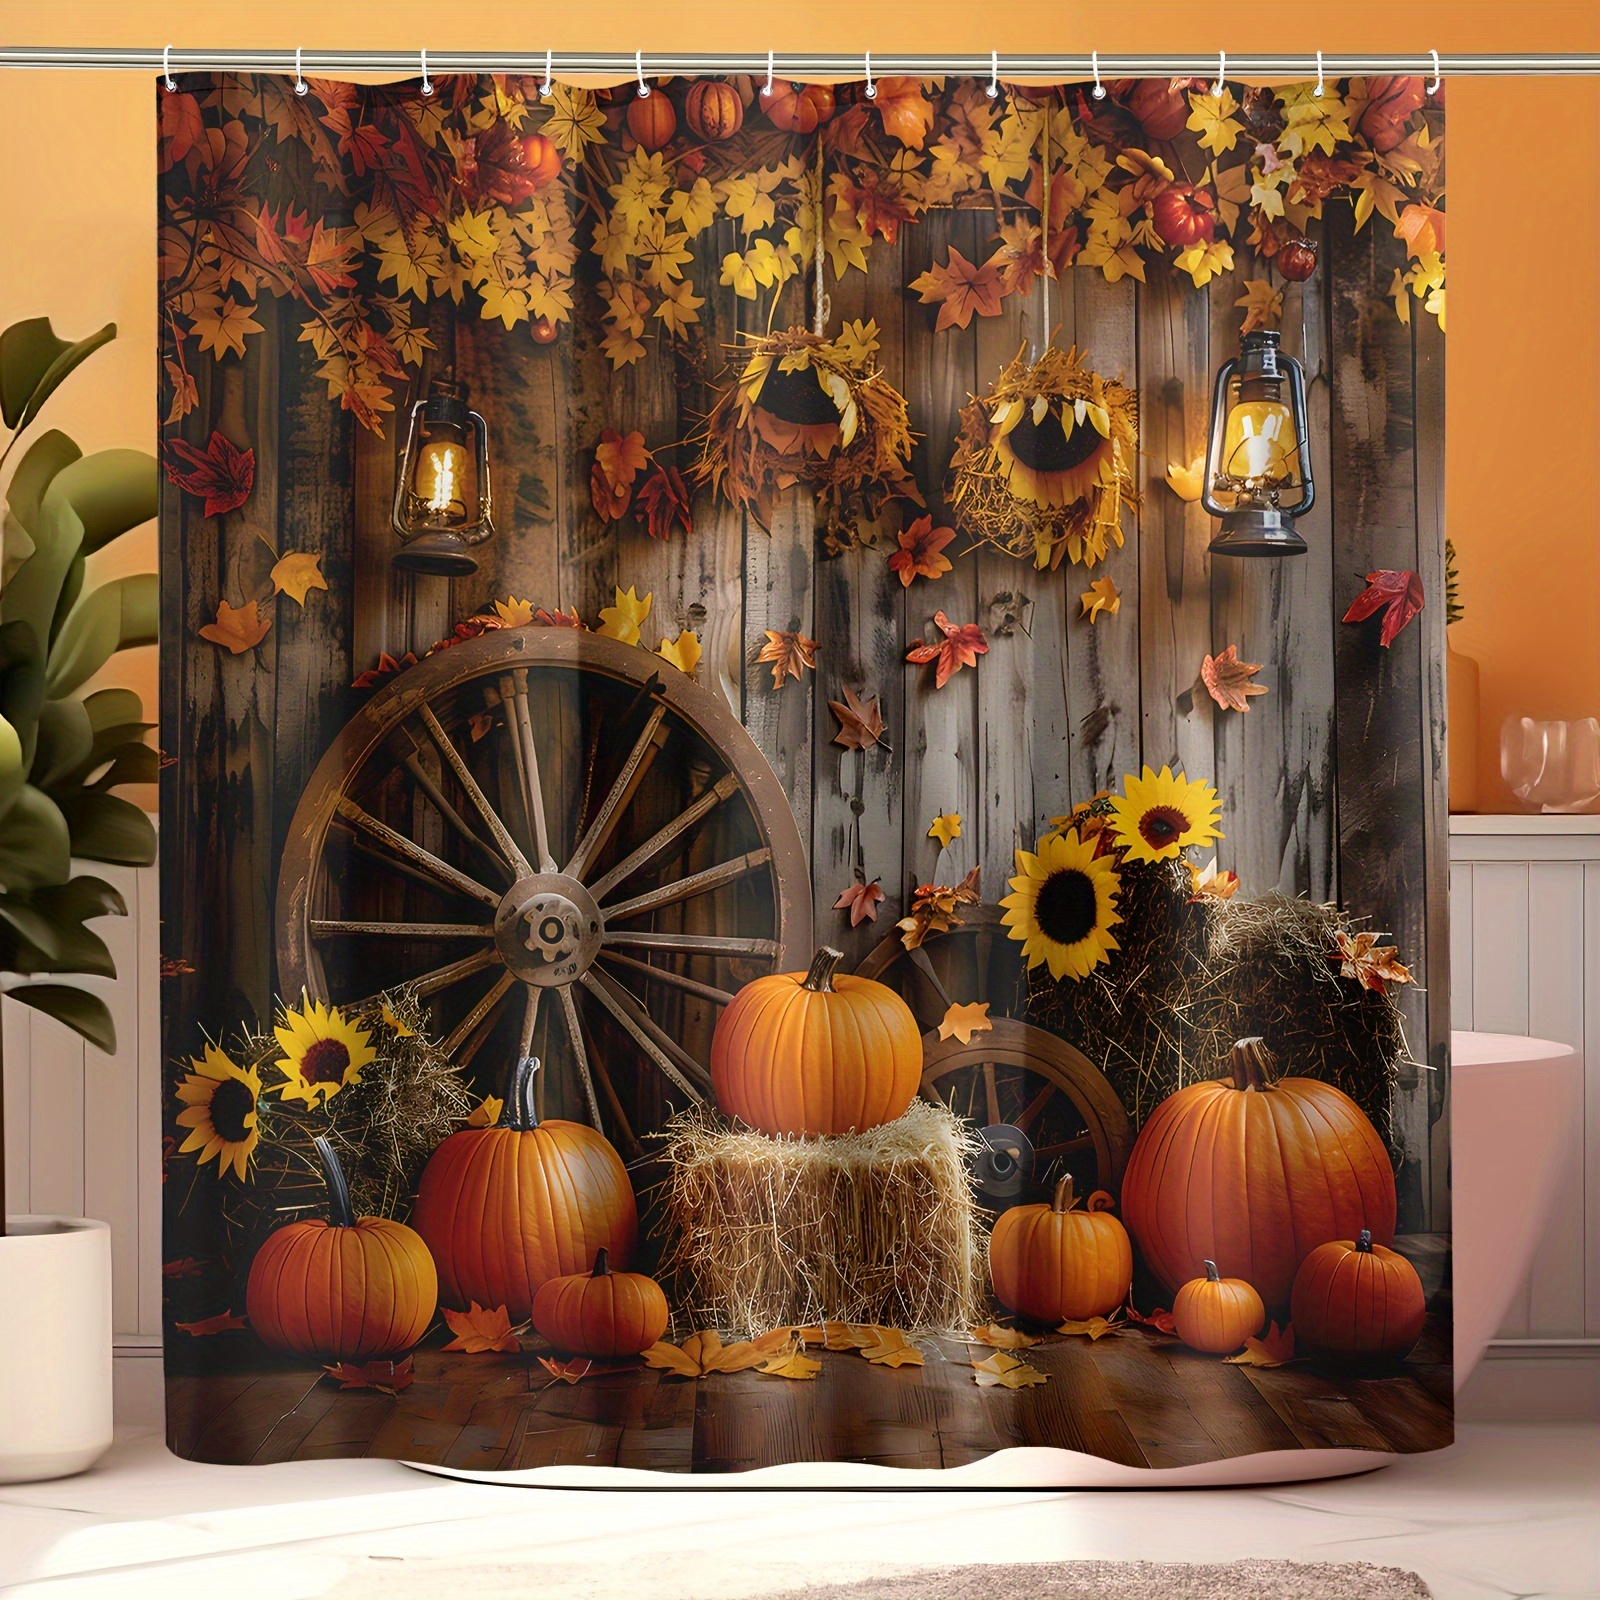 

Pumpkin Sunflower Autumn Harvest Shower Curtain With Hooks - 71x71 Inch Rustic Farmhouse Water-resistant Polyester Bathroom Decor, Machine Washable, Maple Wood Fall Season Theme